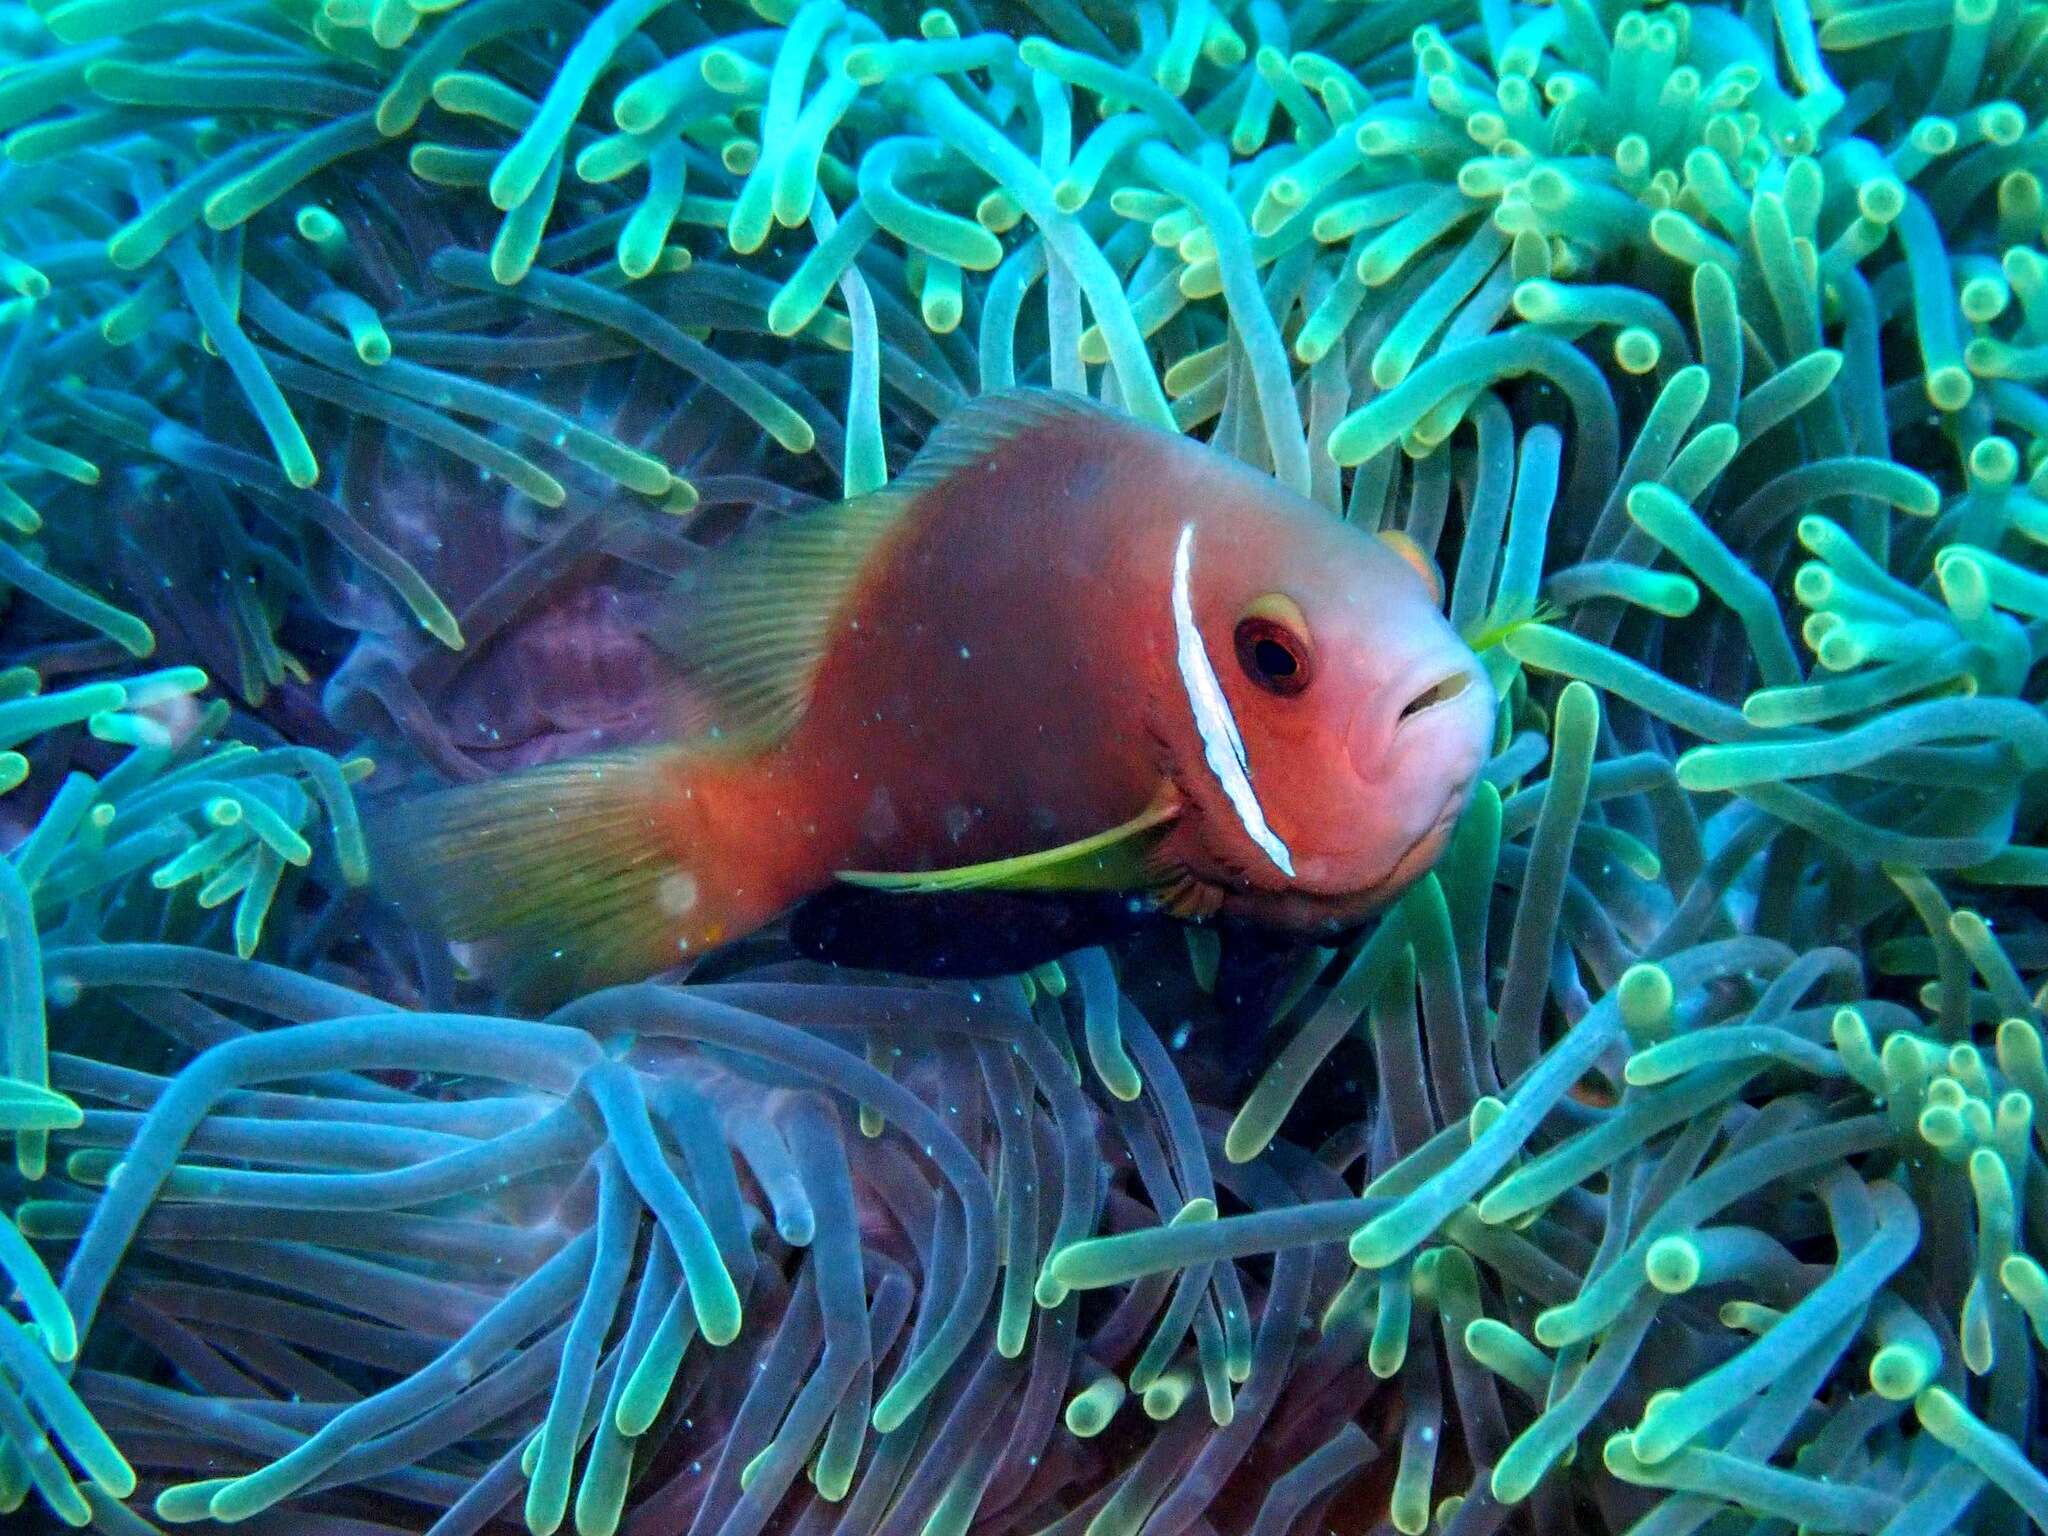 Image of Maldive anemonefish